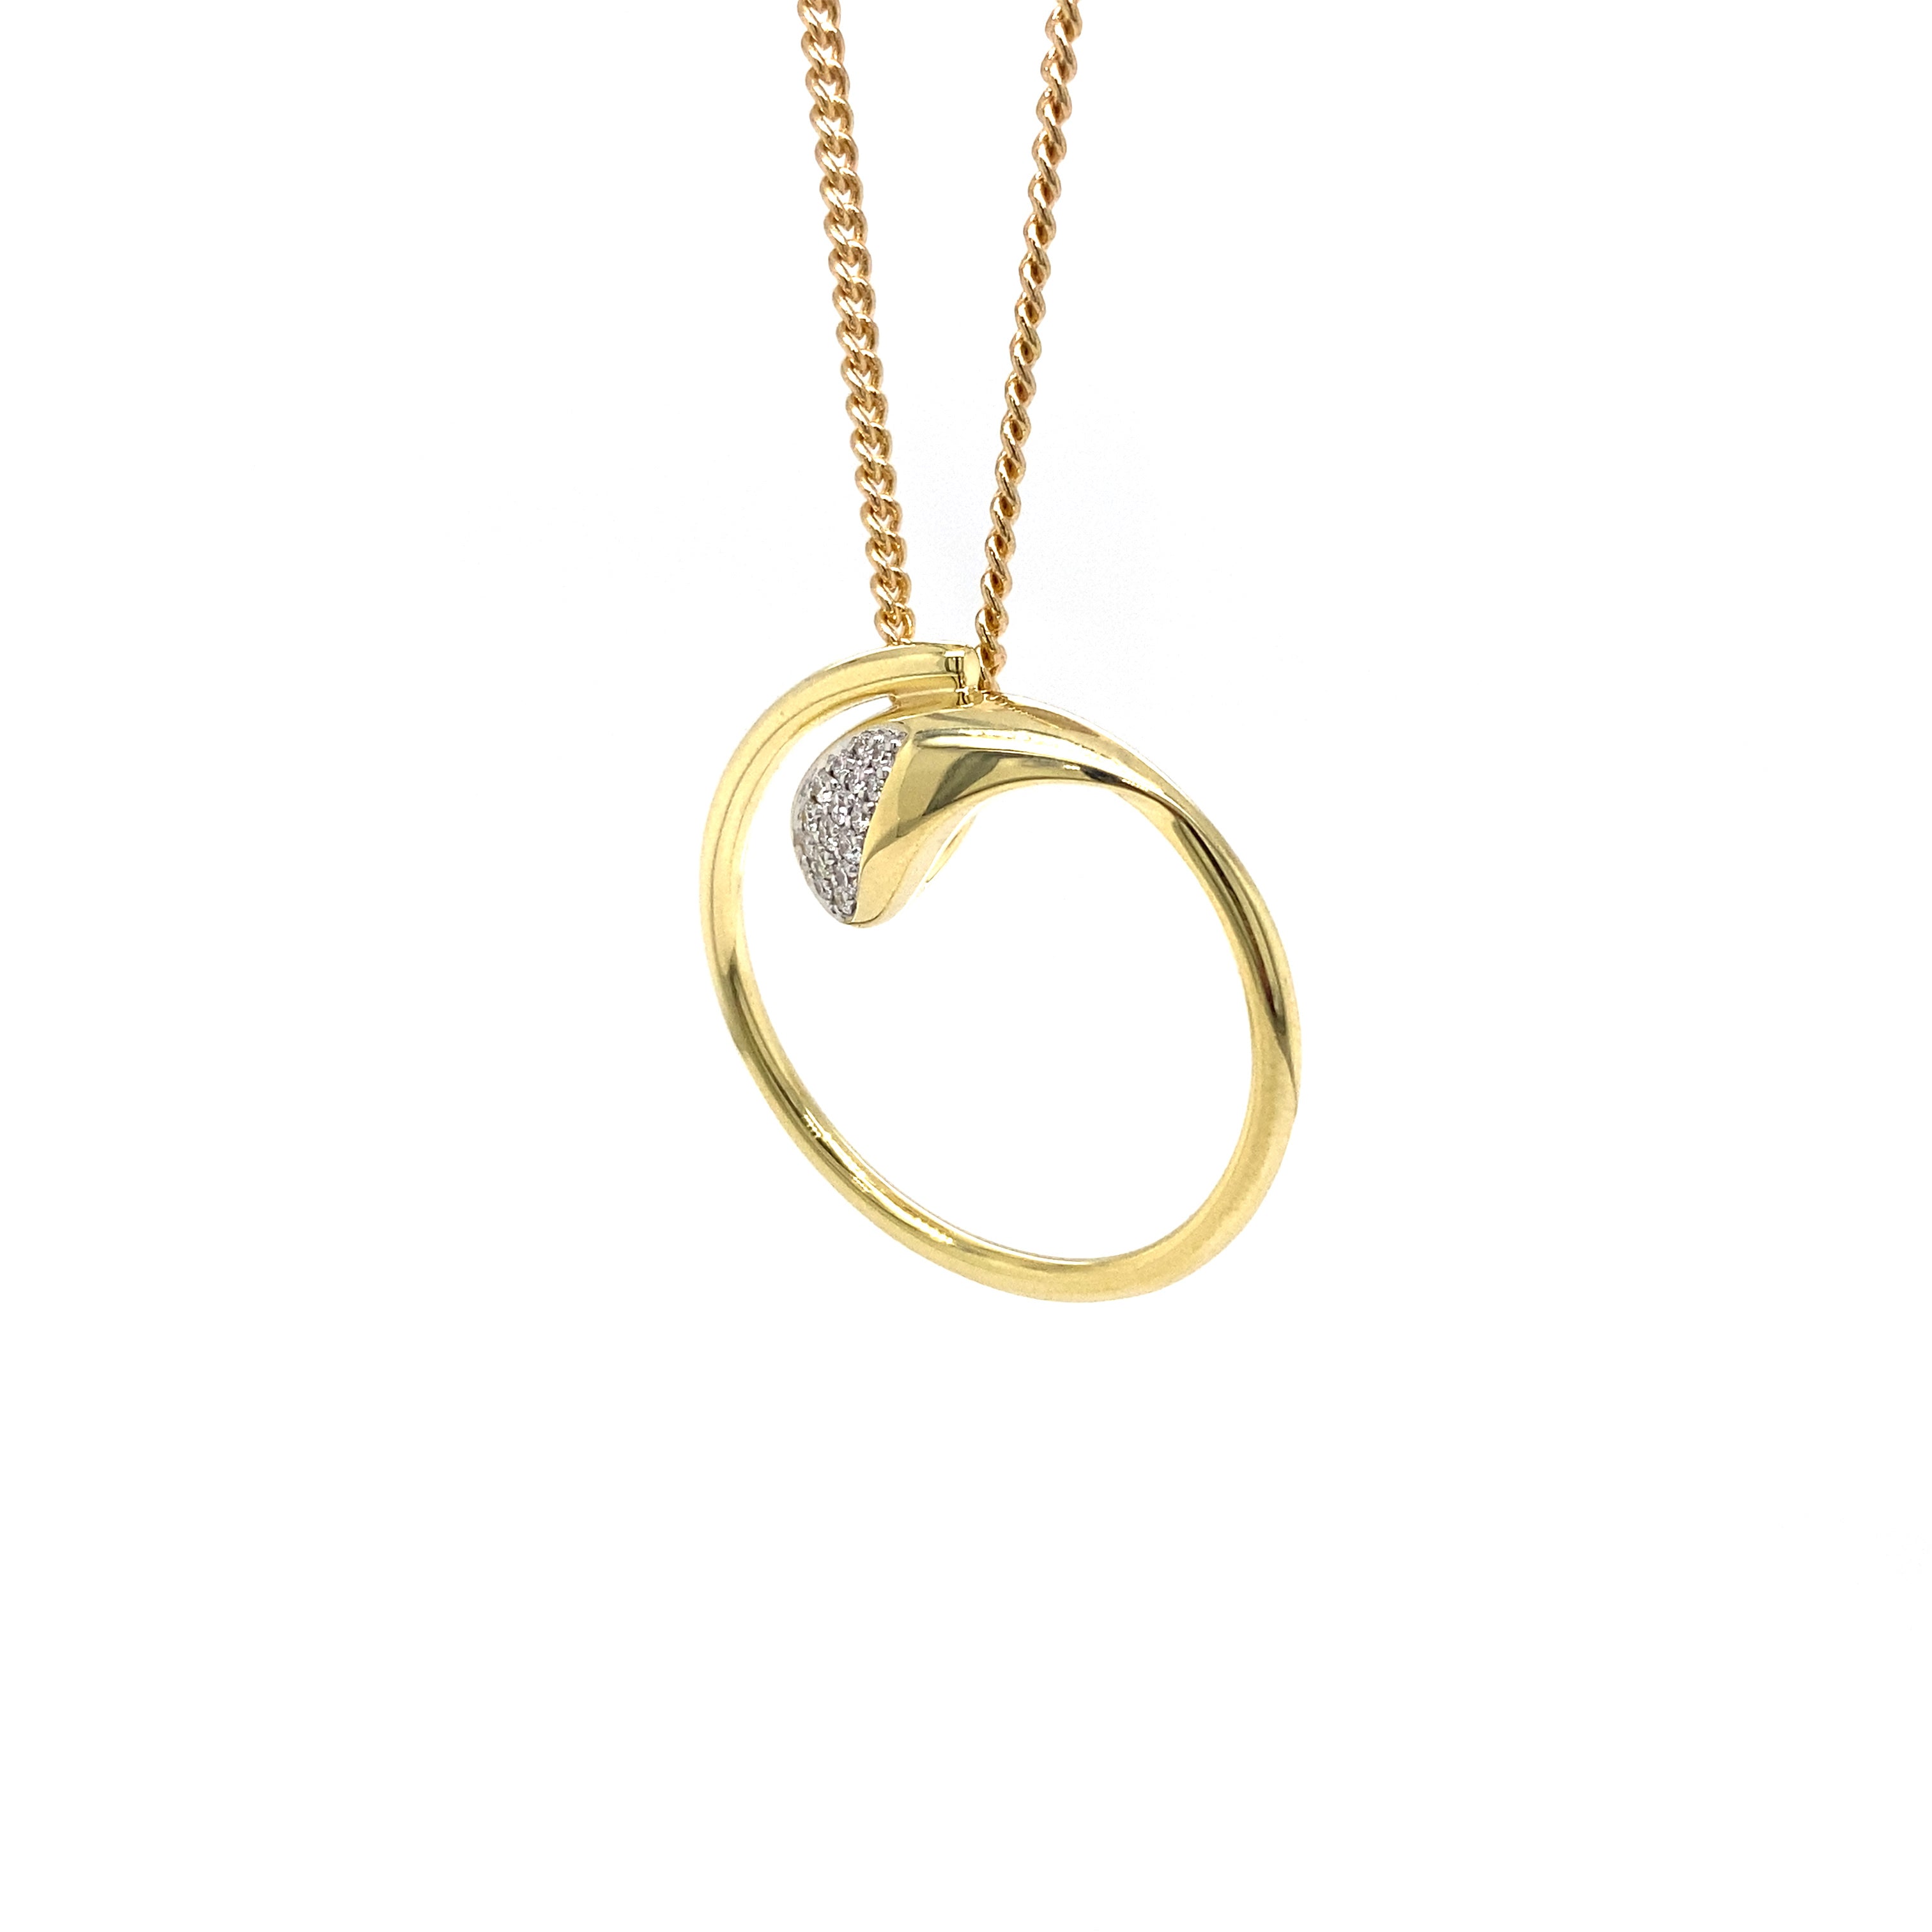 9ct yellow gold diamond circle pendant.